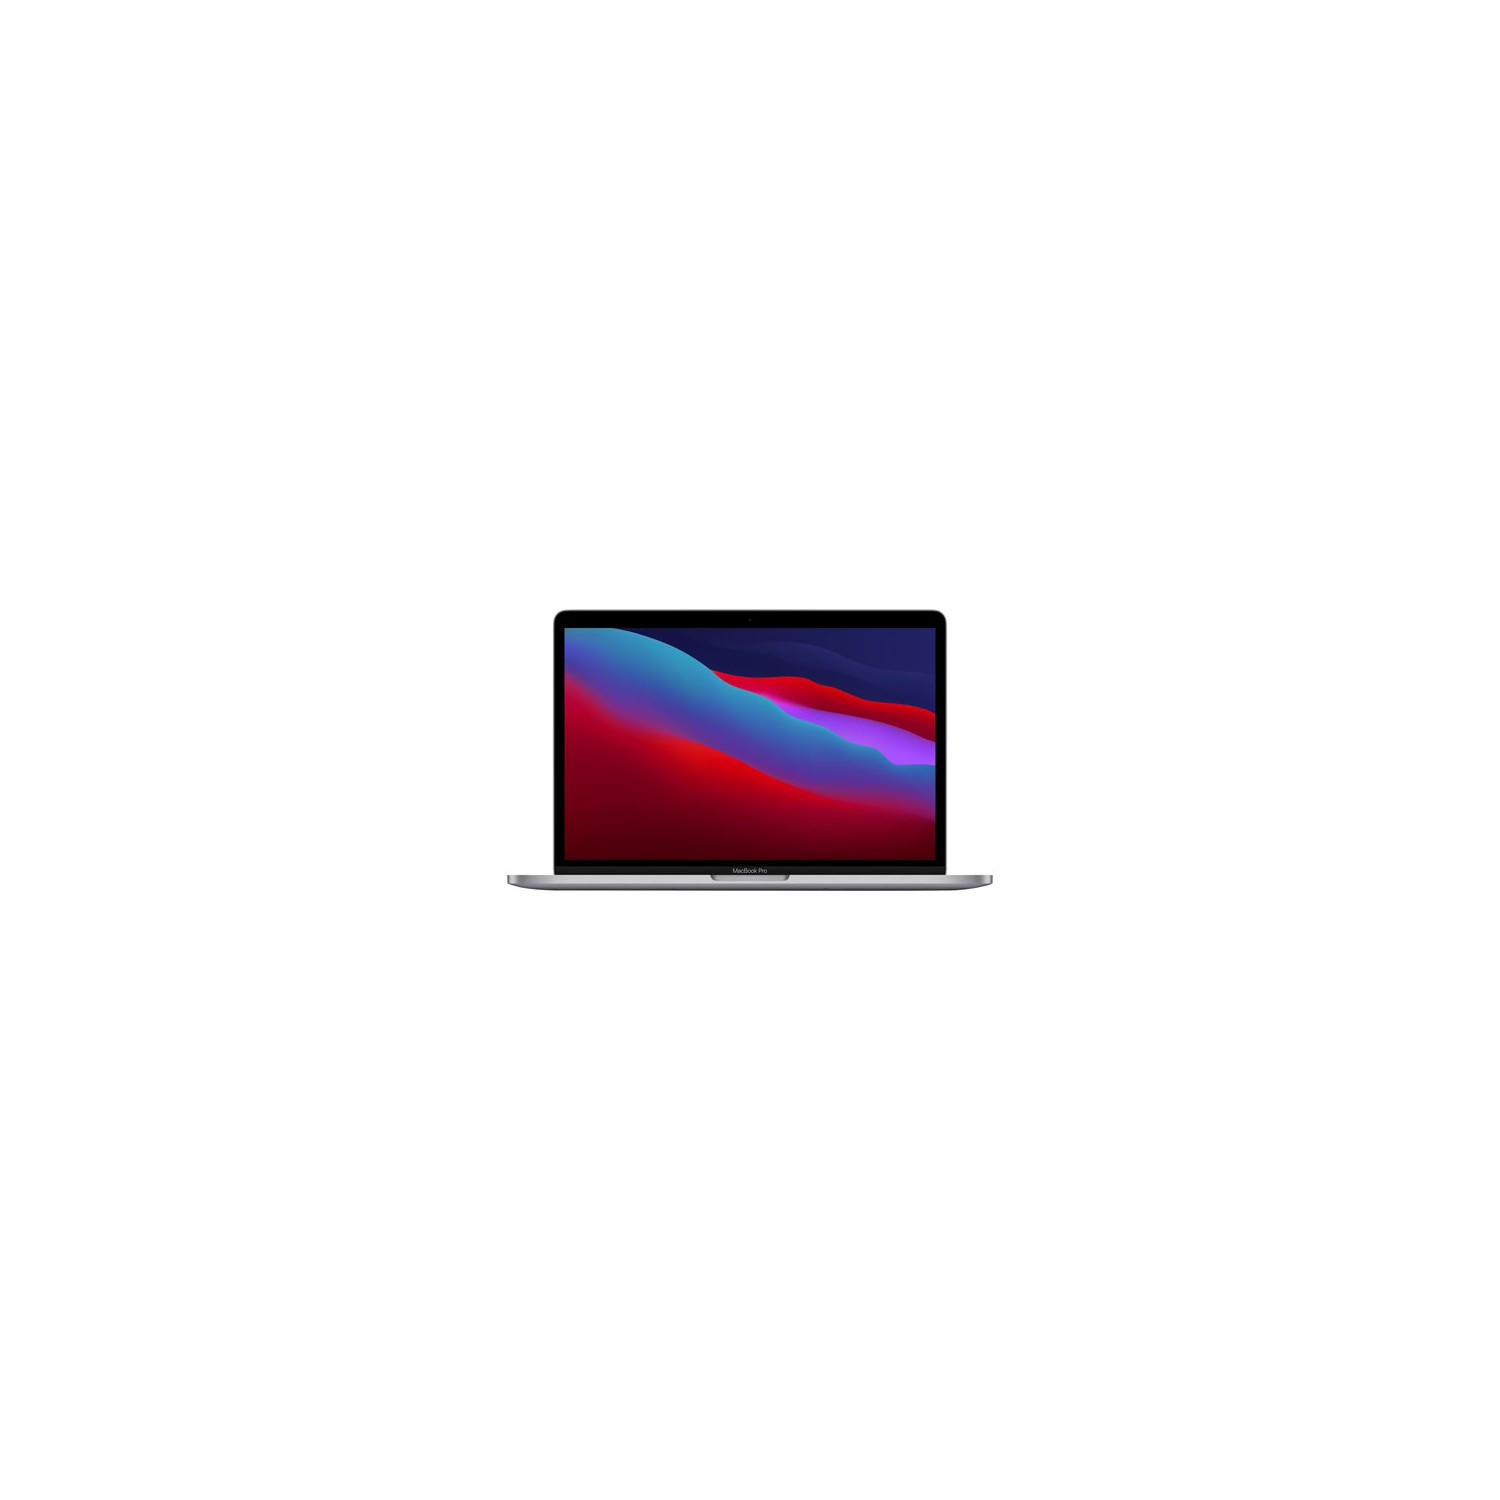 Refurbished (Good) - Apple MacBook Pro (Fall 2020) 13.3" w/ Touch Bar - Space Grey (Apple M1 Chip / 256GB SSD / 8GB RAM) - Fr